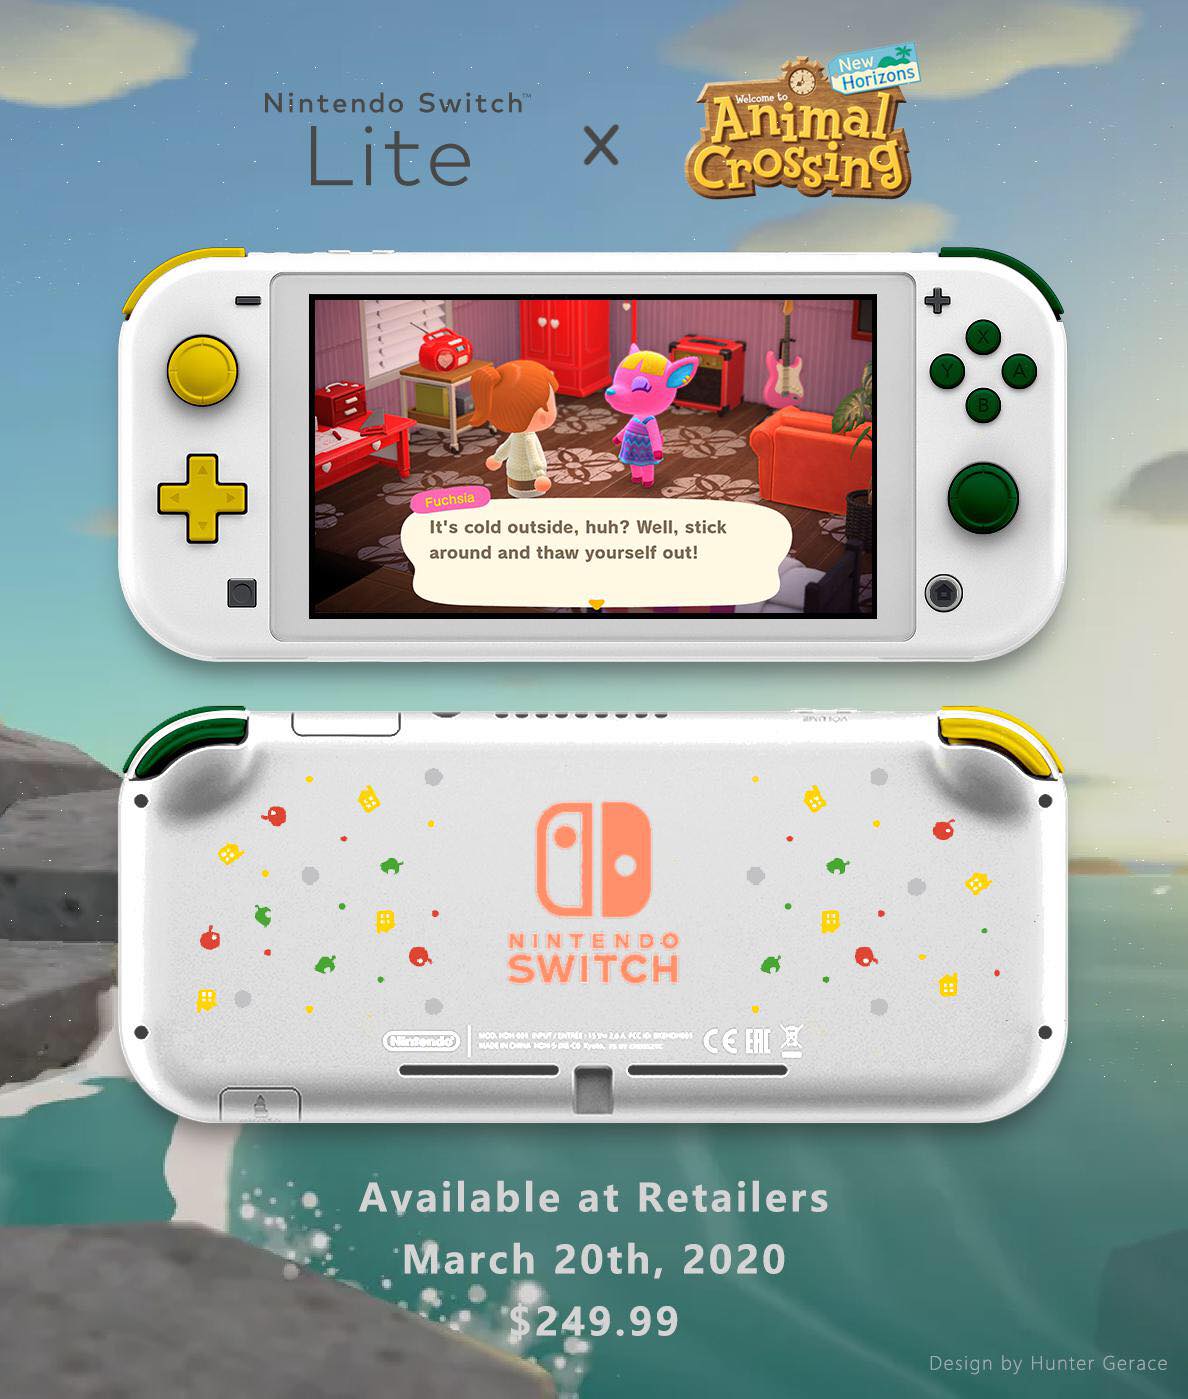 These custom Nintendo Switch Lite renders look snazzy